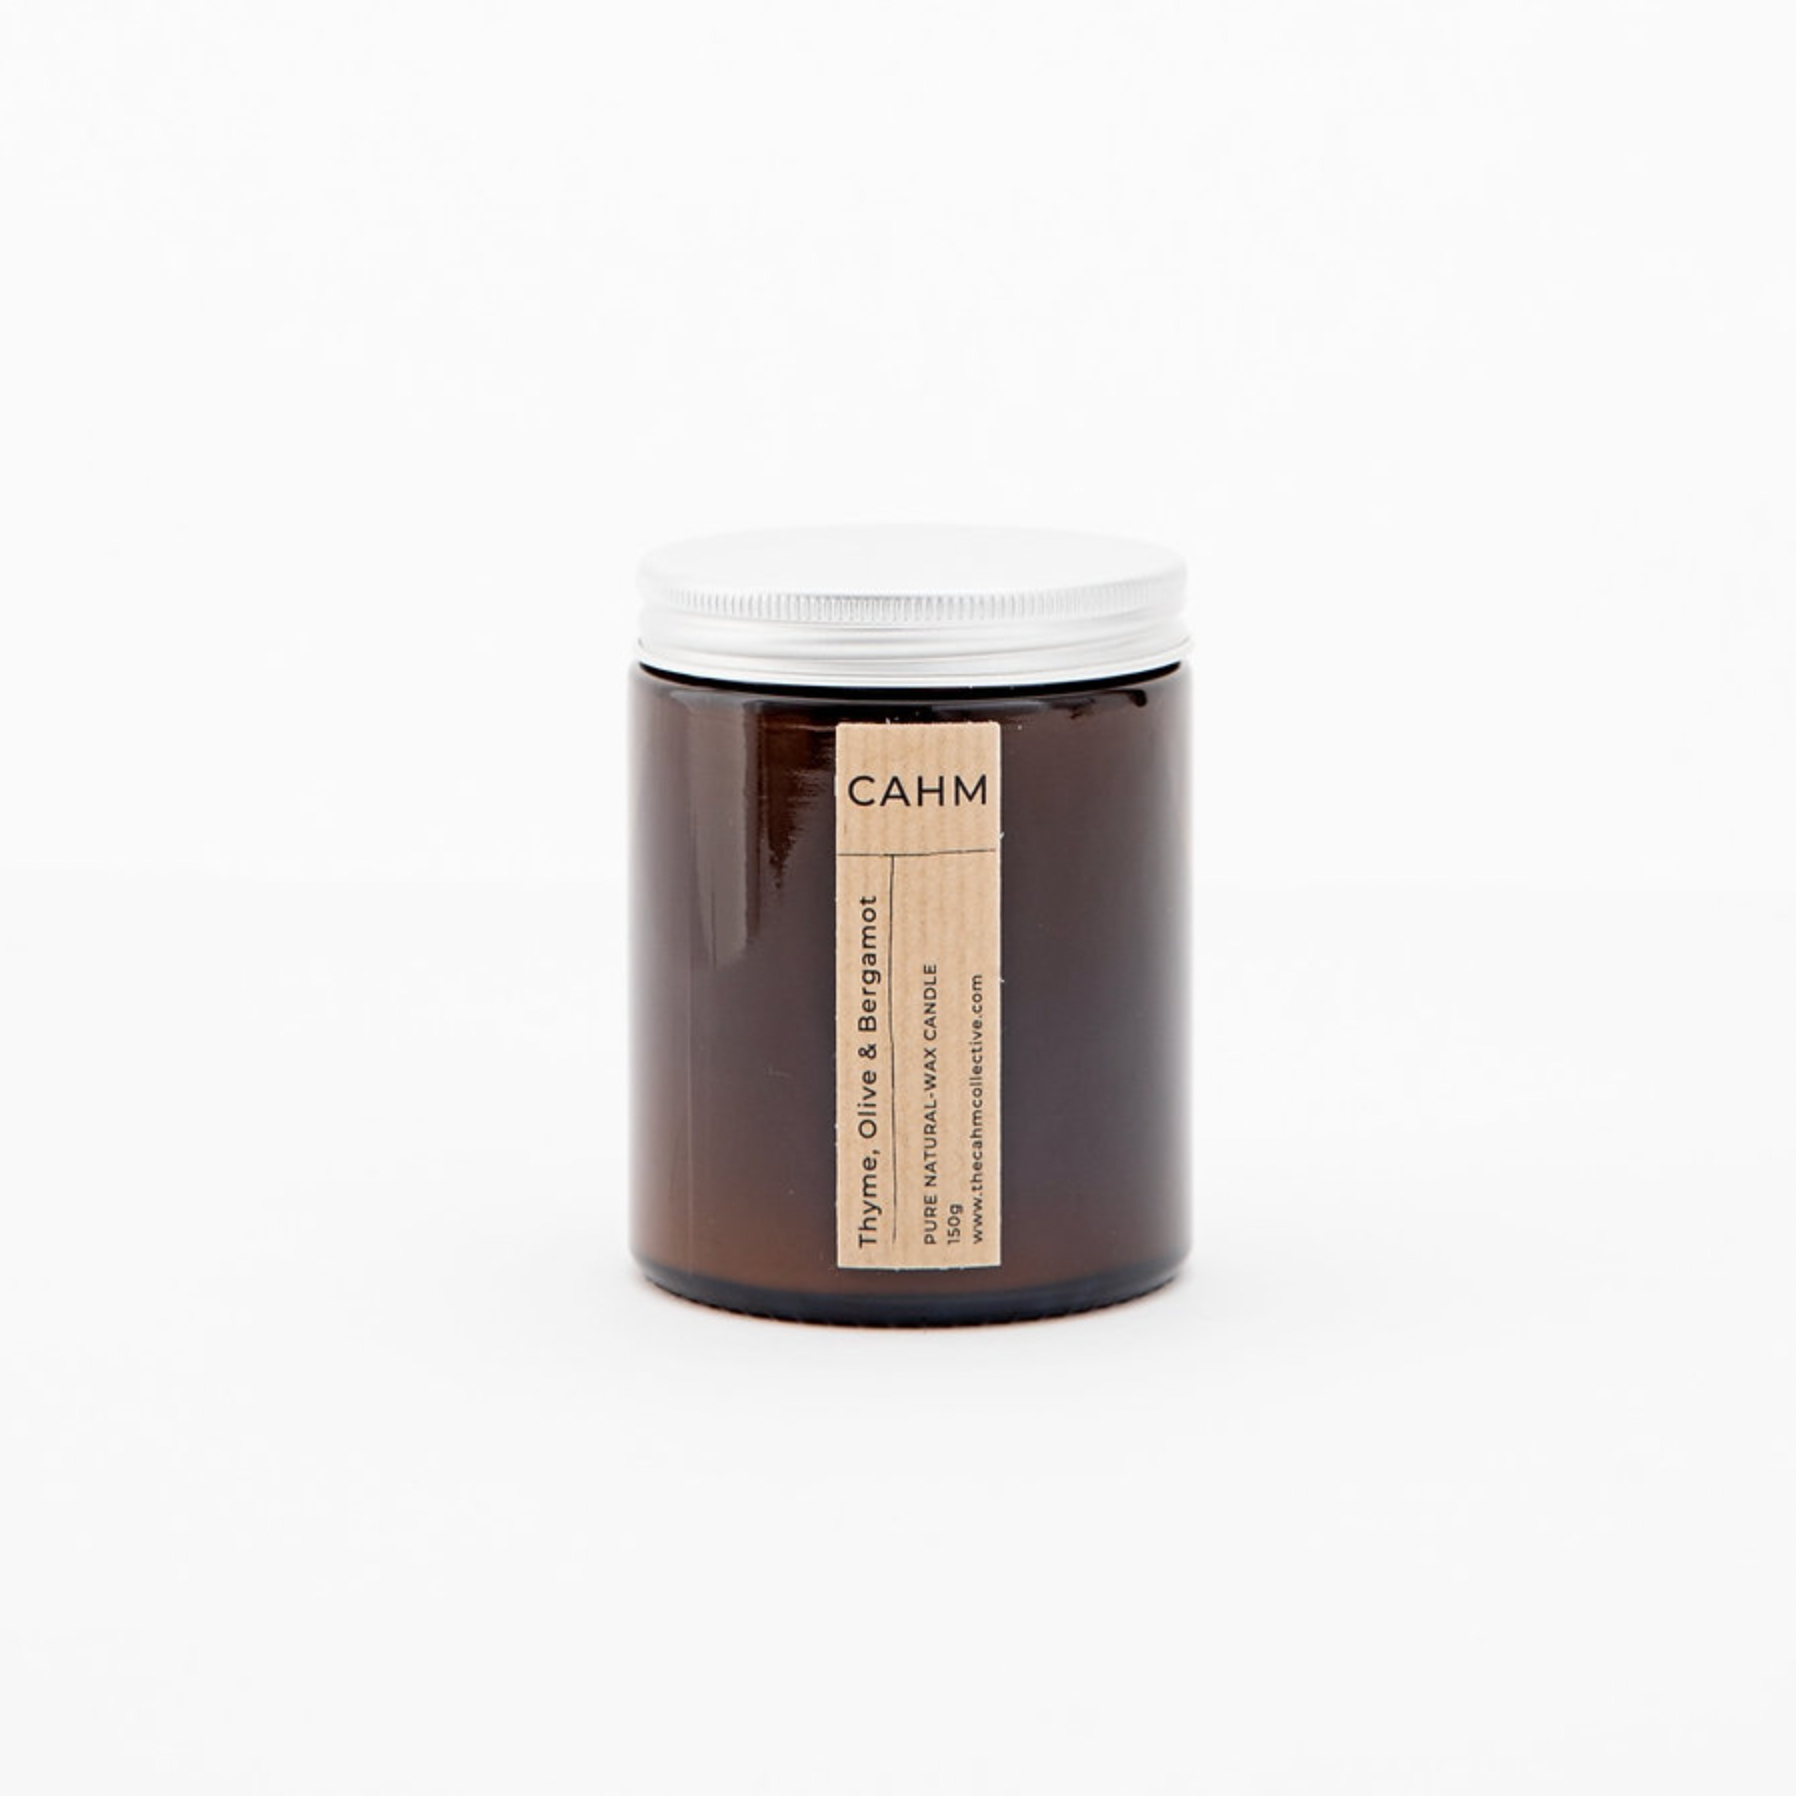 Lavender + Bergamot Glass Tumbler Soy Candle — emmacate